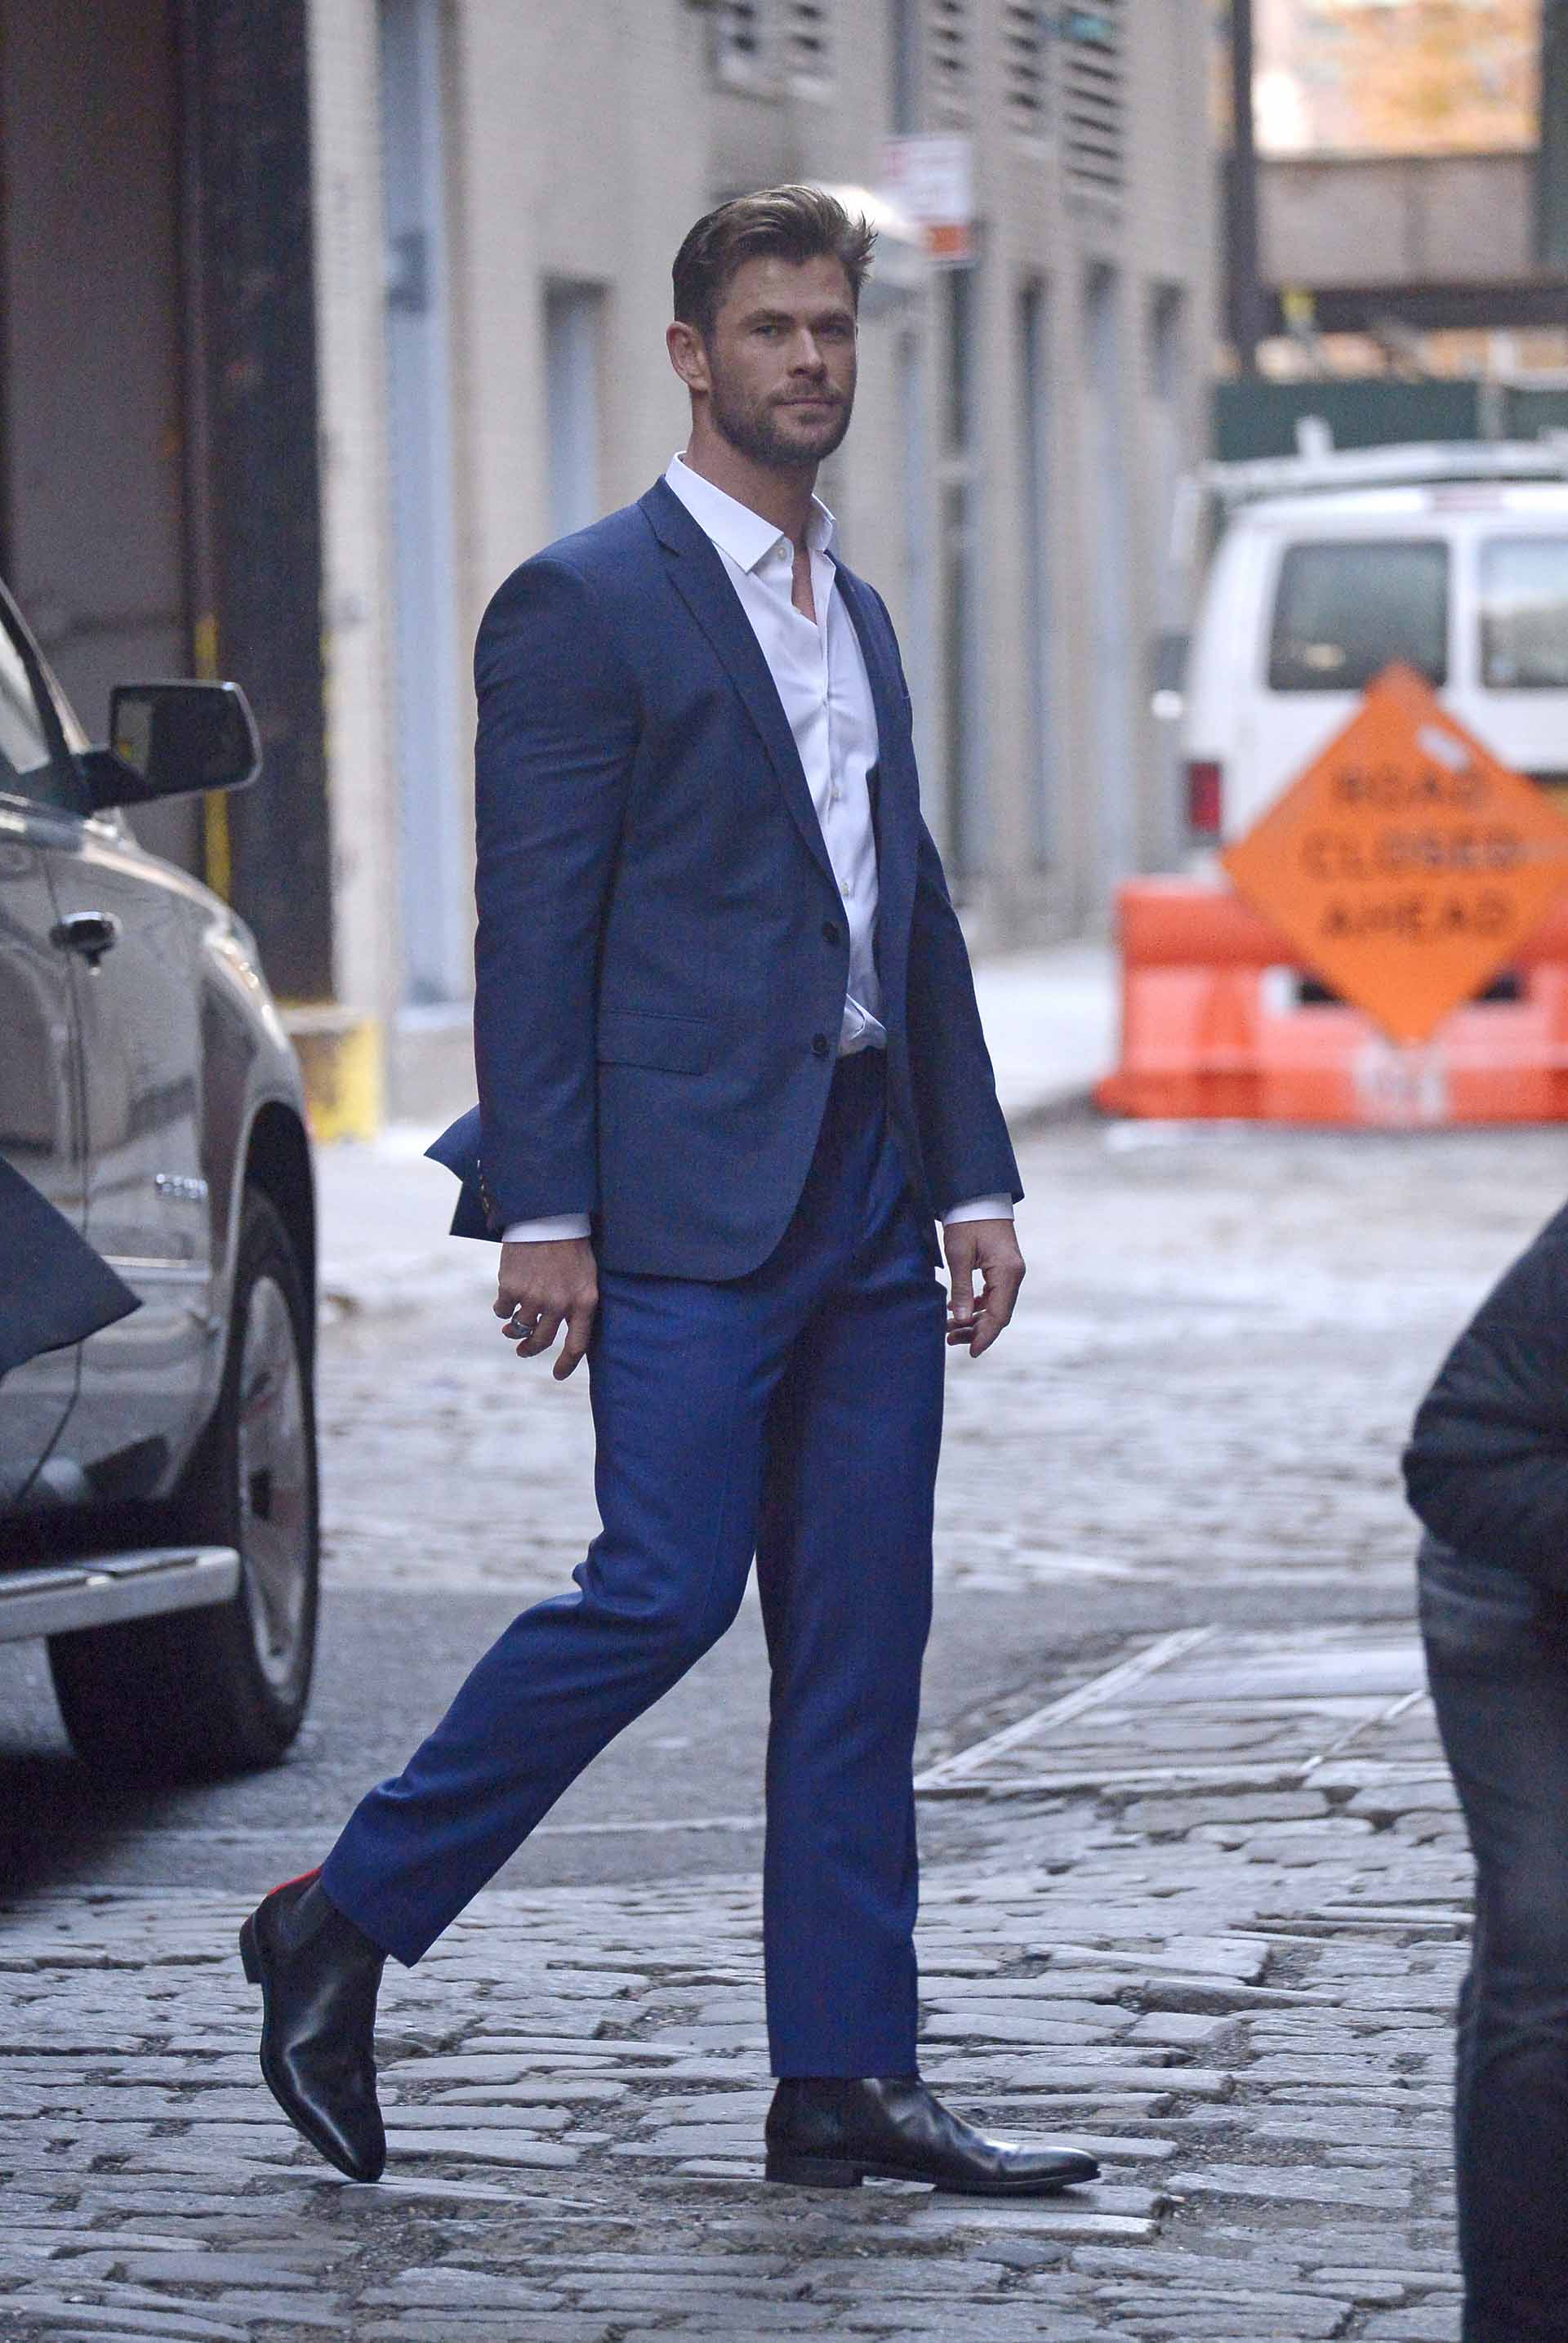 Actor Chris Hemsworth during photoshoot in New York City